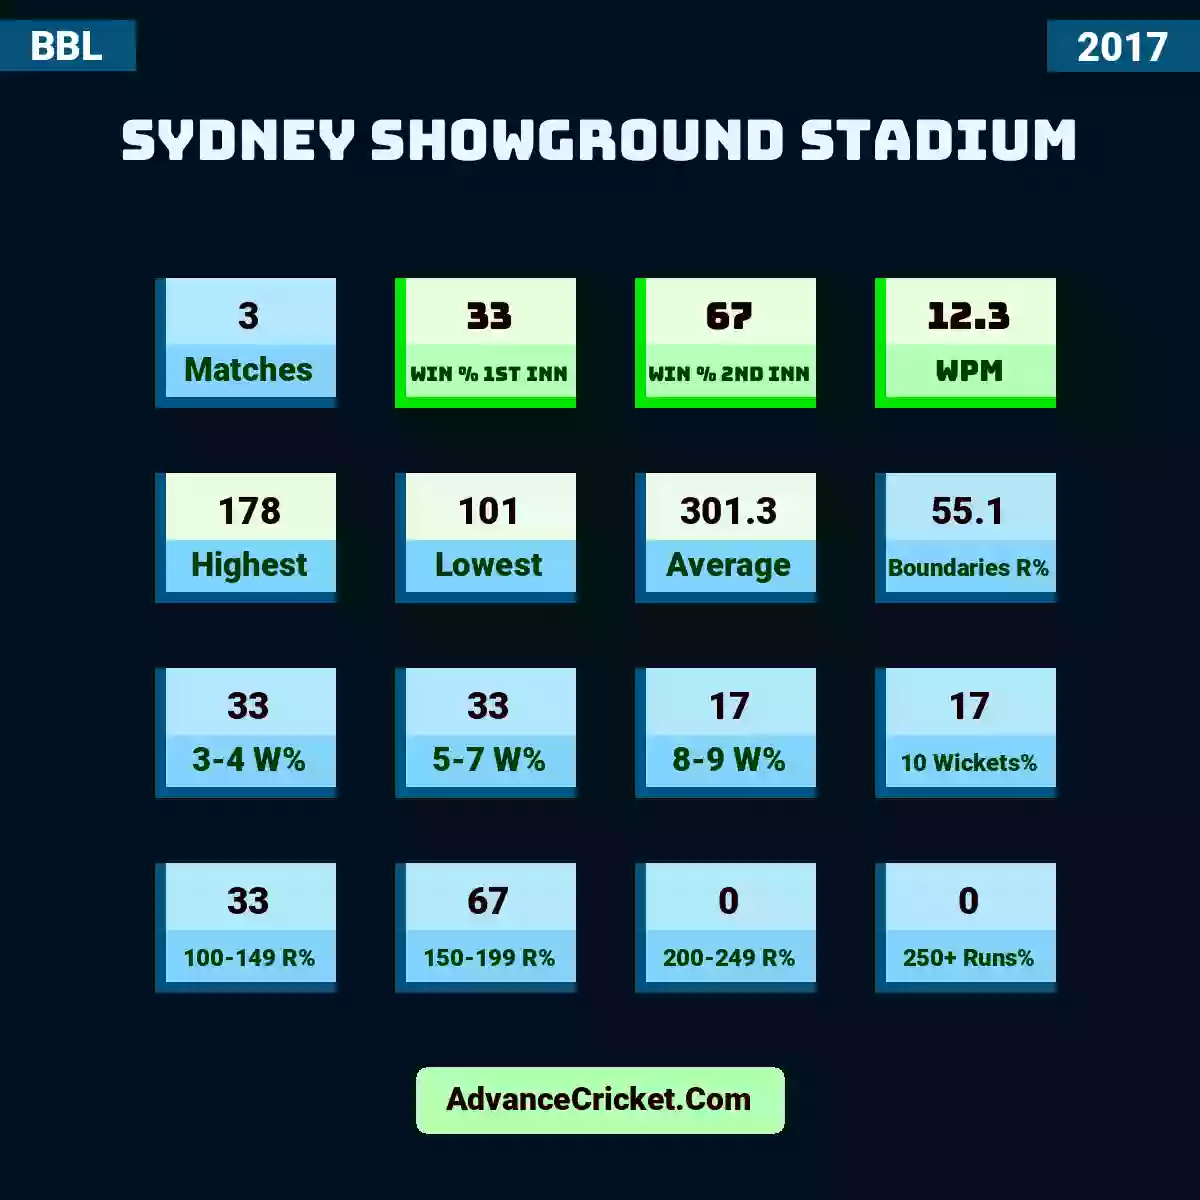 Image showing Sydney Showground Stadium with Matches: 3, Win % 1st Inn: 33, Win % 2nd Inn: 67, WPM: 12.3, Highest: 178, Lowest: 101, Average: 301.3, Boundaries R%: 55.1, 3-4 W%: 33, 5-7 W%: 33, 8-9 W%: 17, 10 Wickets%: 17, 100-149 R%: 33, 150-199 R%: 67, 200-249 R%: 0, 250+ Runs%: 0.